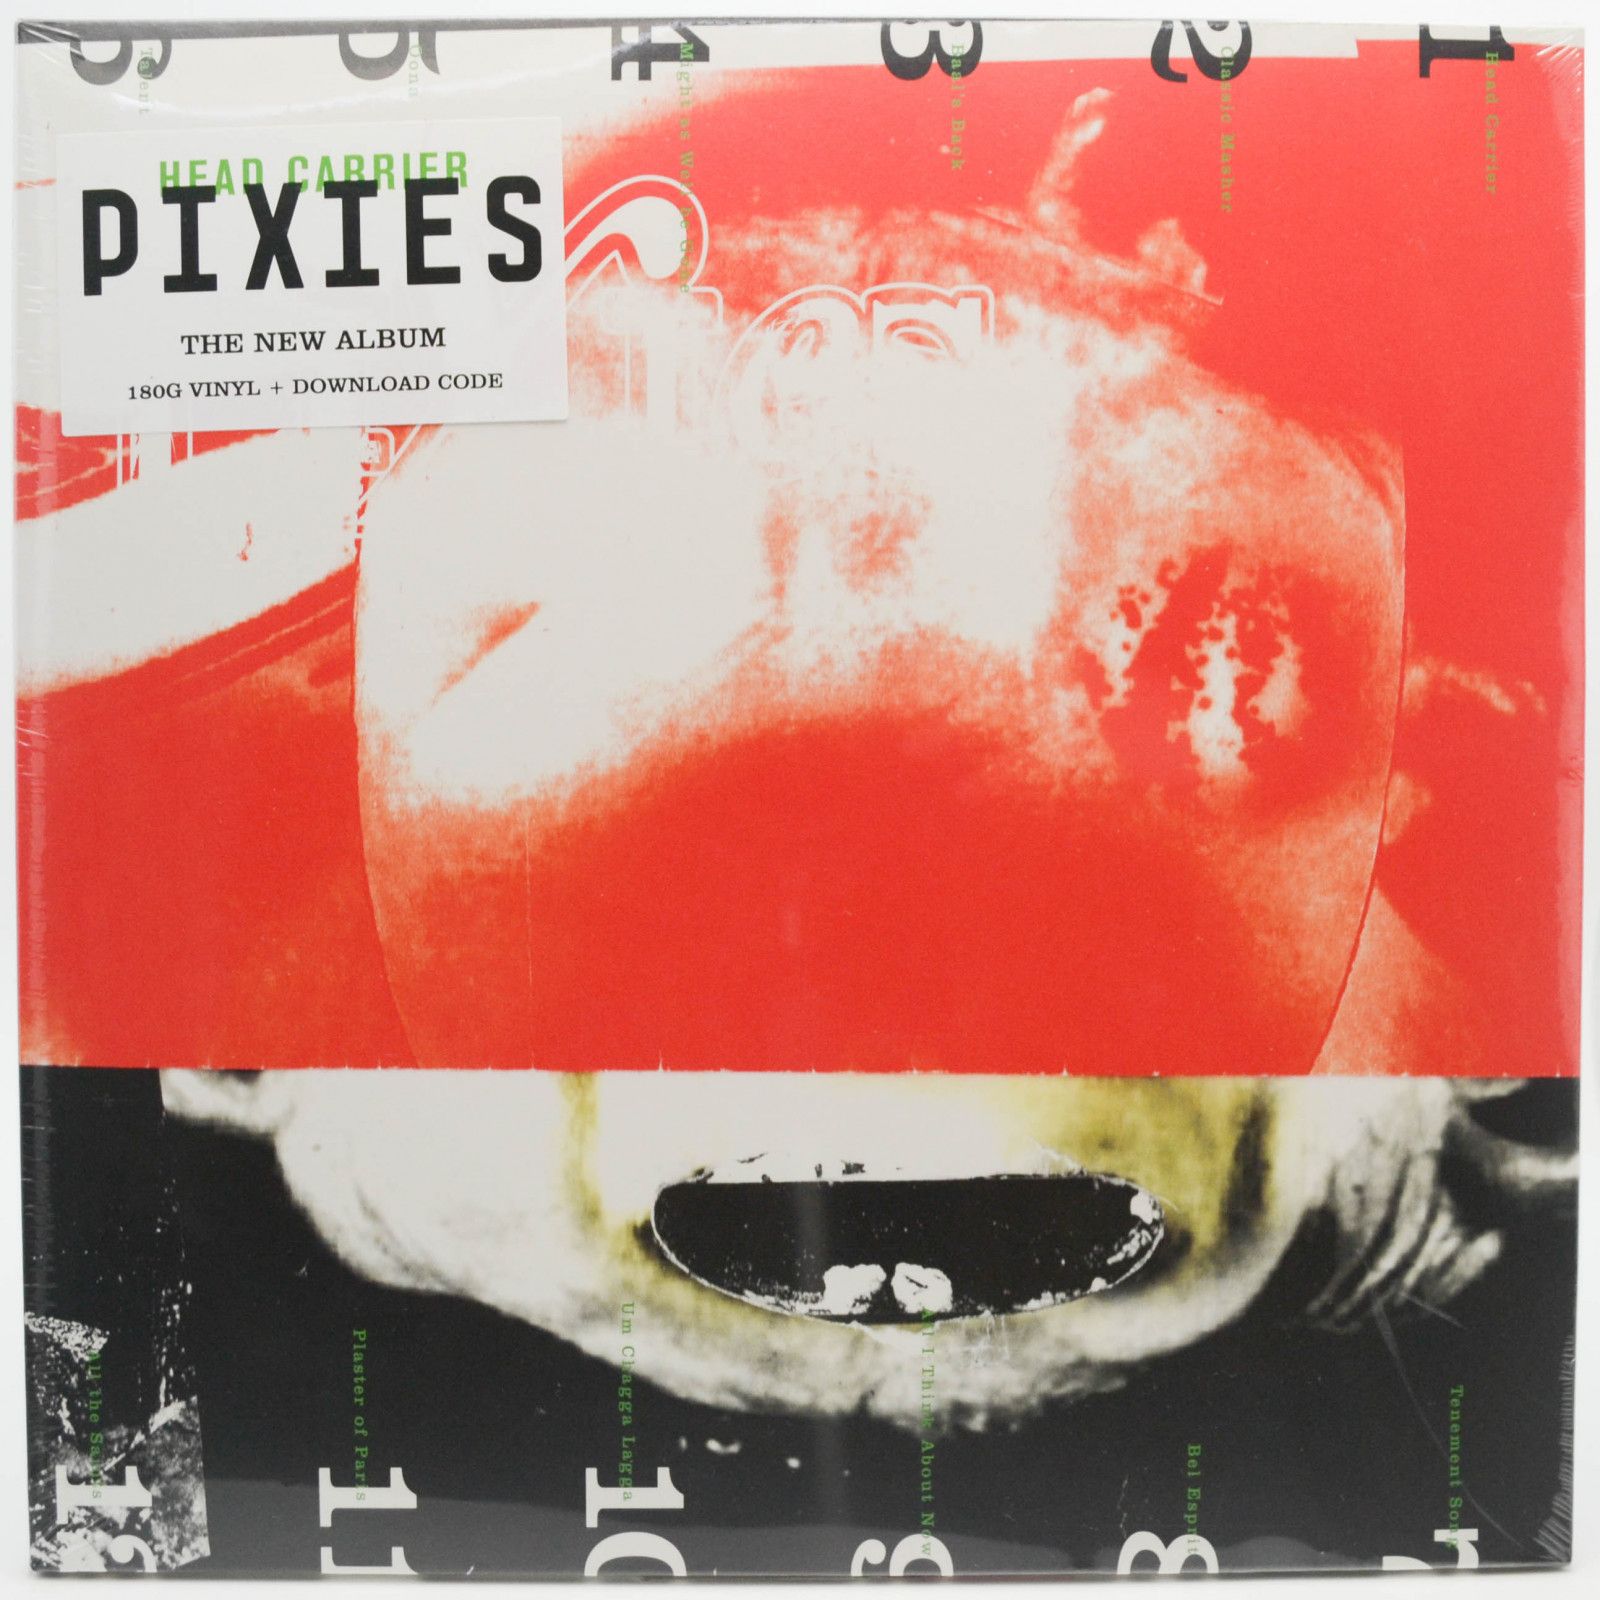 Pixies — Head Carrier, 2016